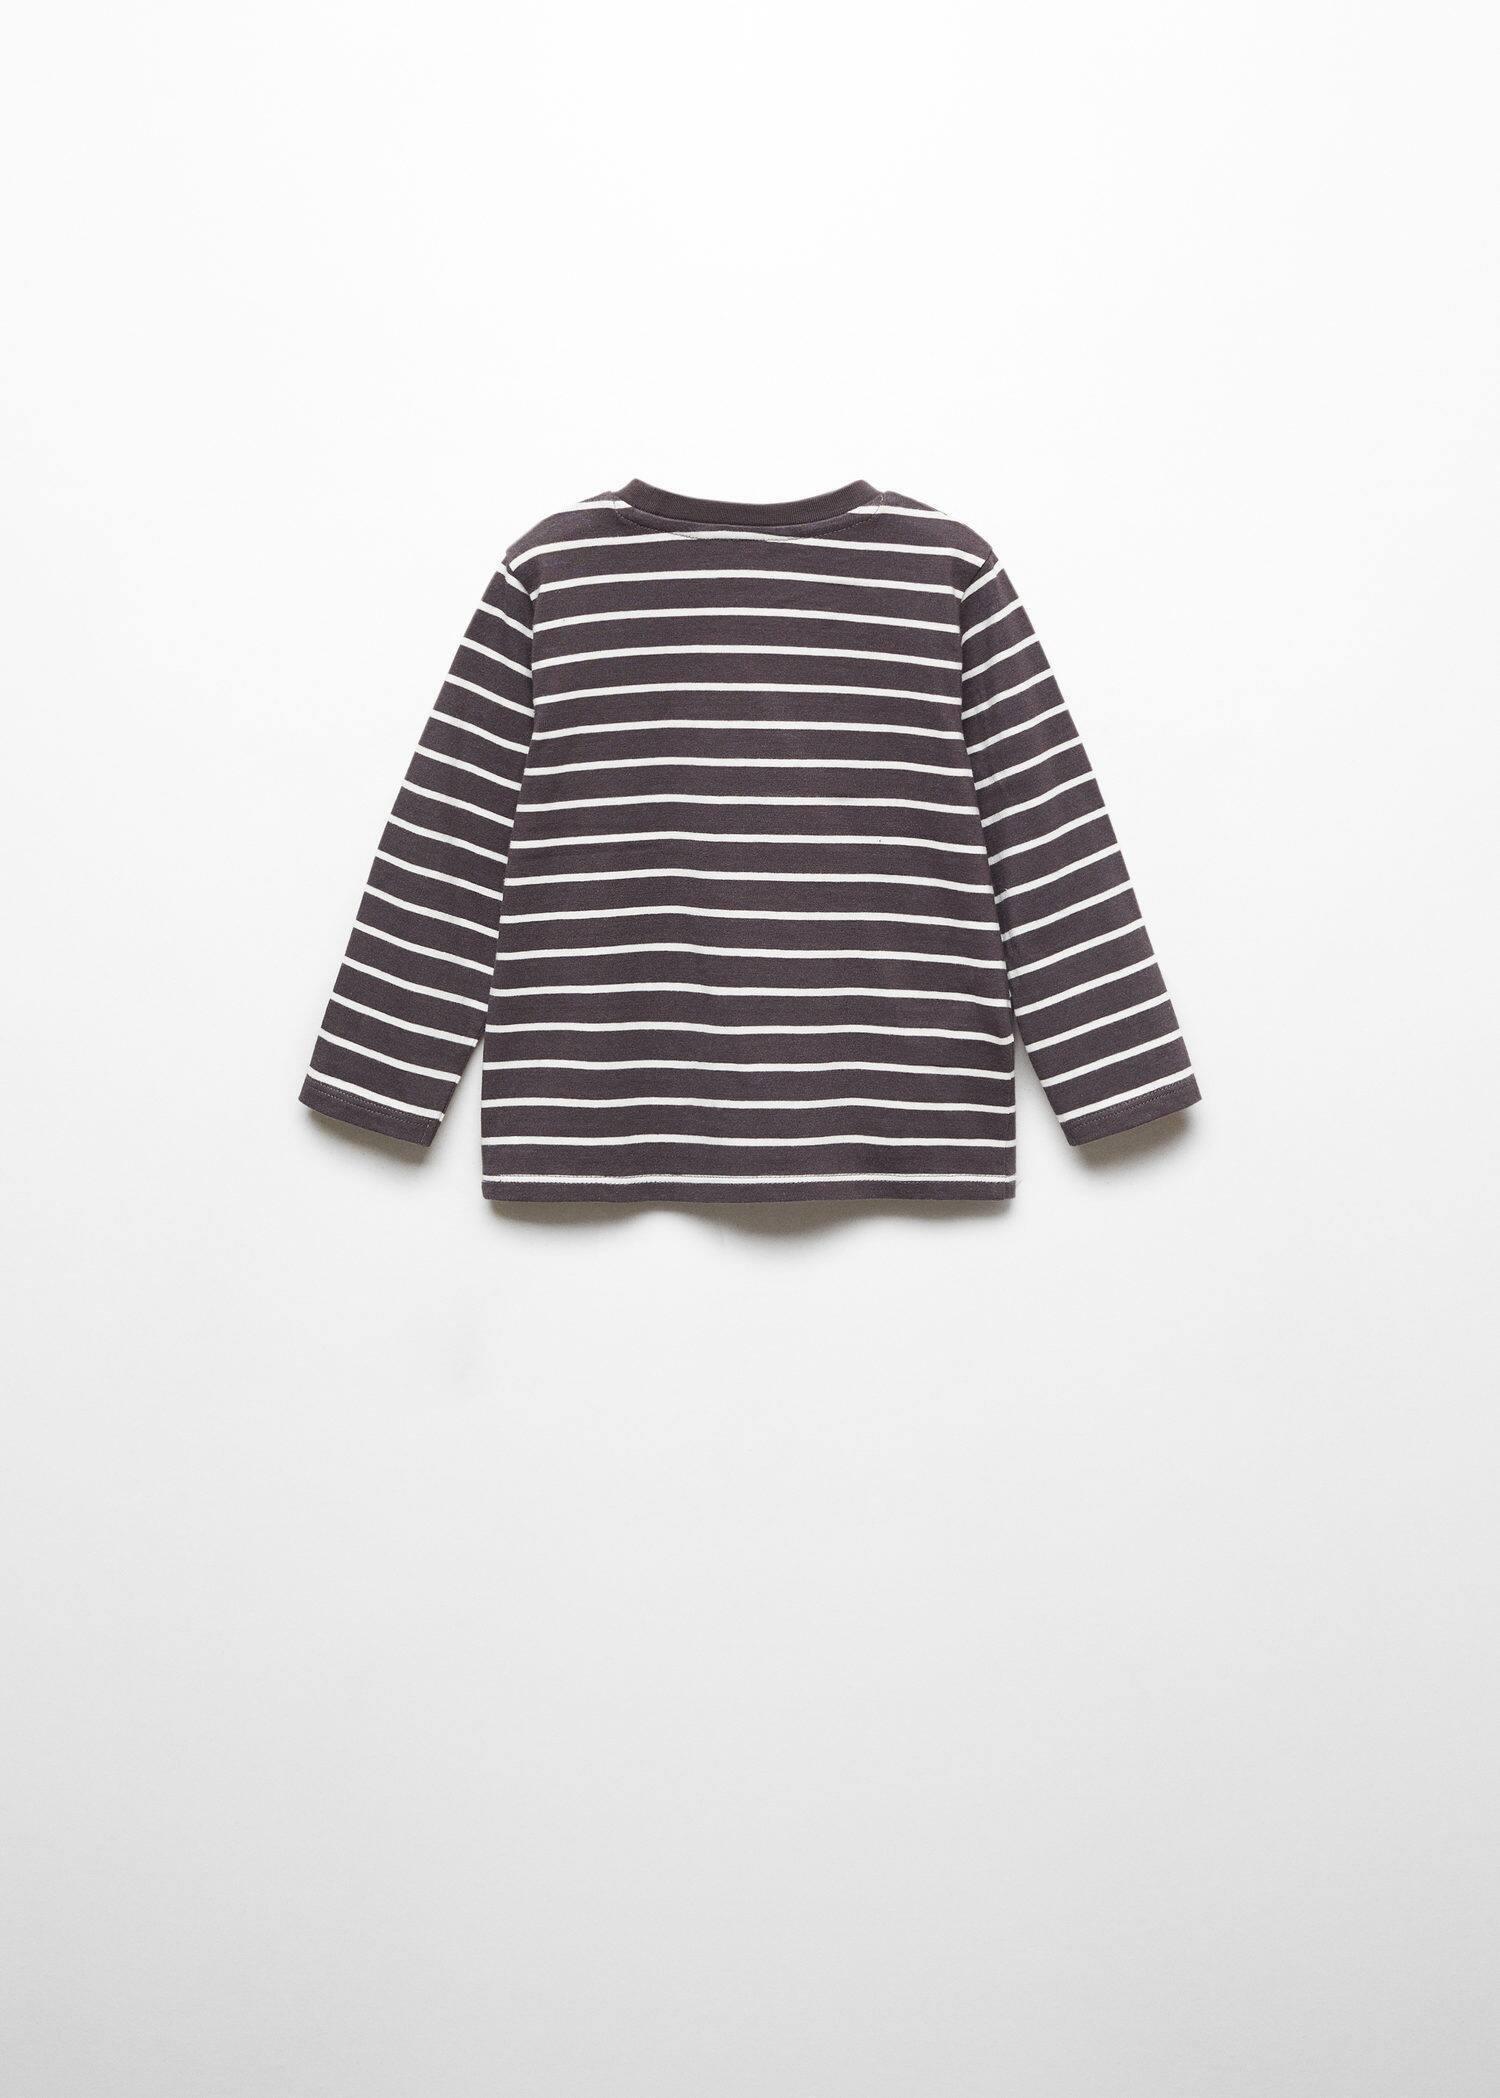 Mango - Grey Striped Long Sleeves T-Shirt, Kids Girls